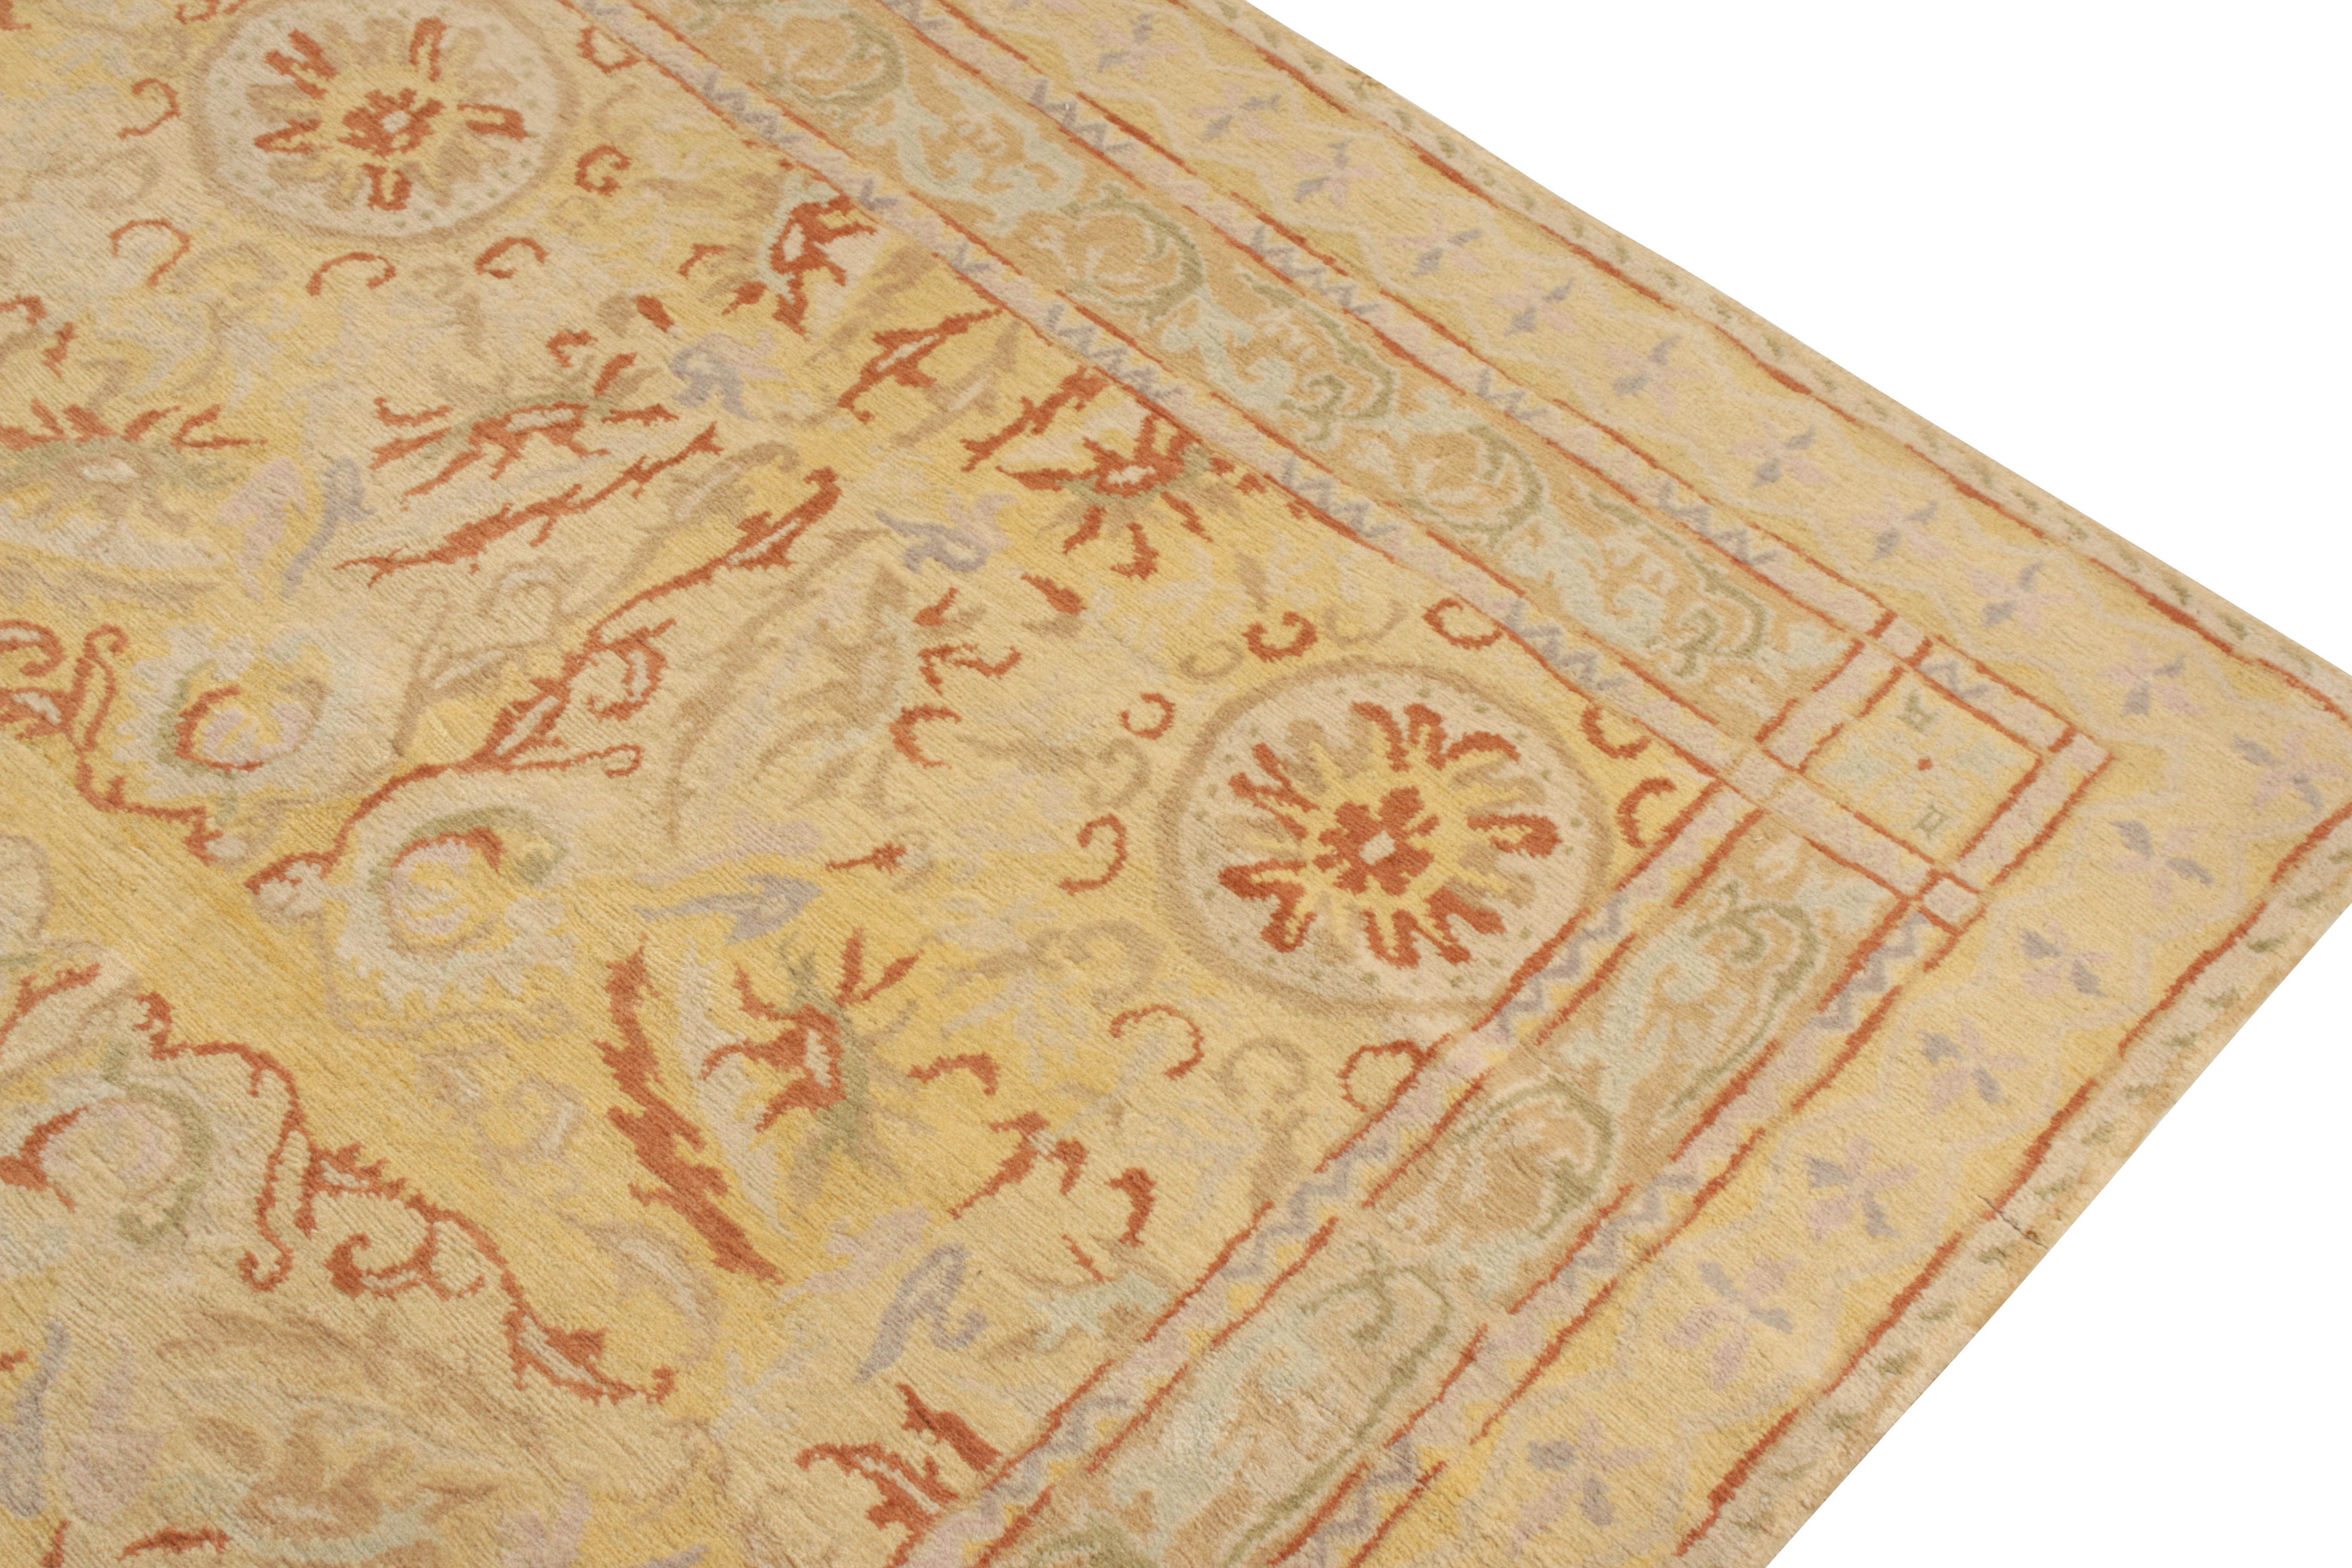 Nepalese Rug & Kilim's Spanish European Style rug, Tangerine, Cream & Yellow Medallions For Sale